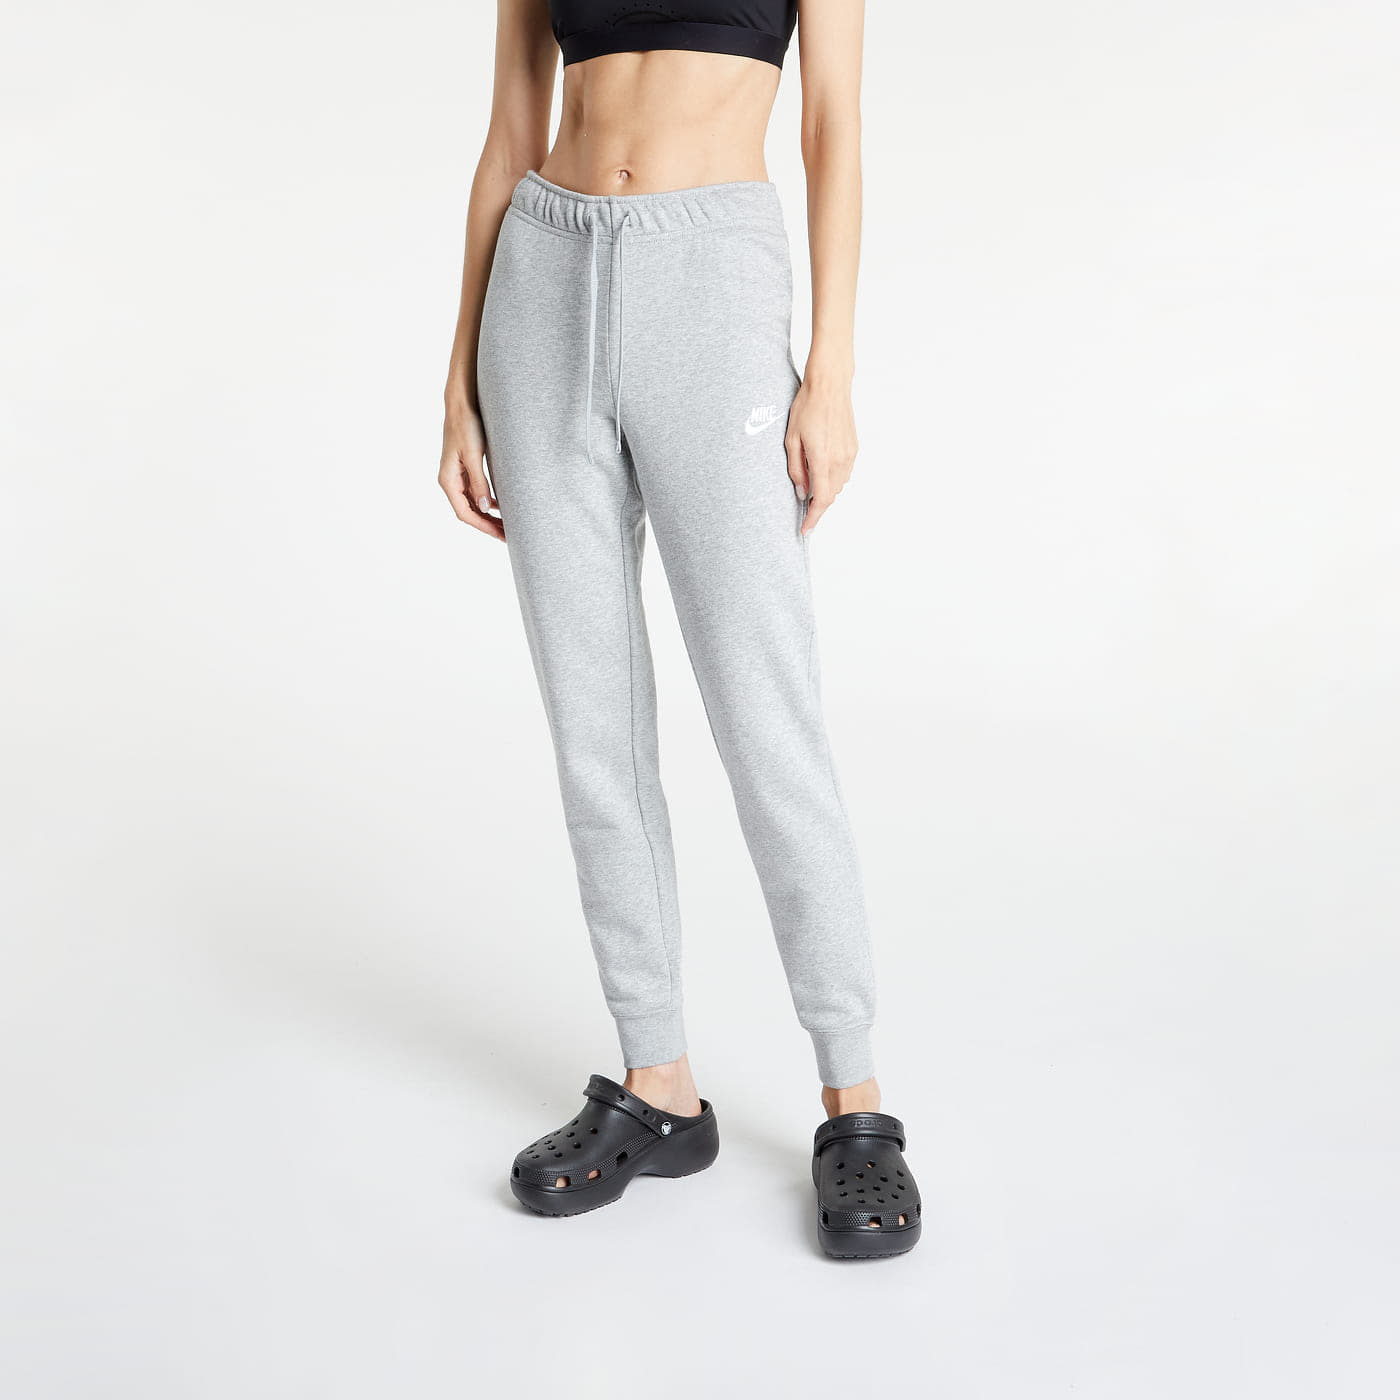 Nike - w sweatpants grey